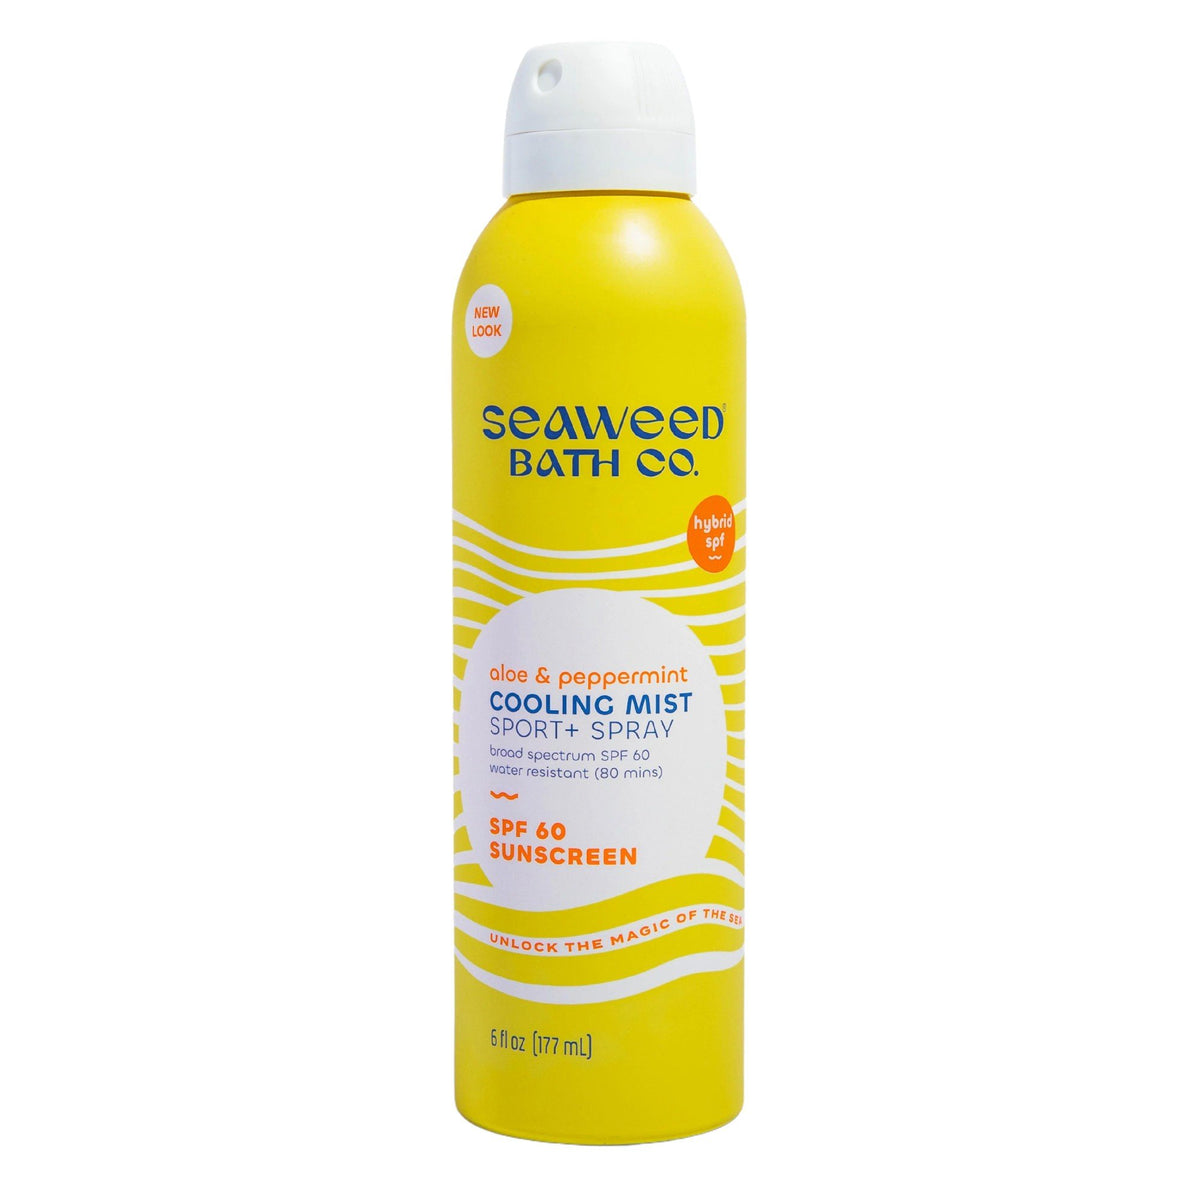 The Seaweed Bath Co. Cooling Mist SPF 60 Spray 6 oz Spray